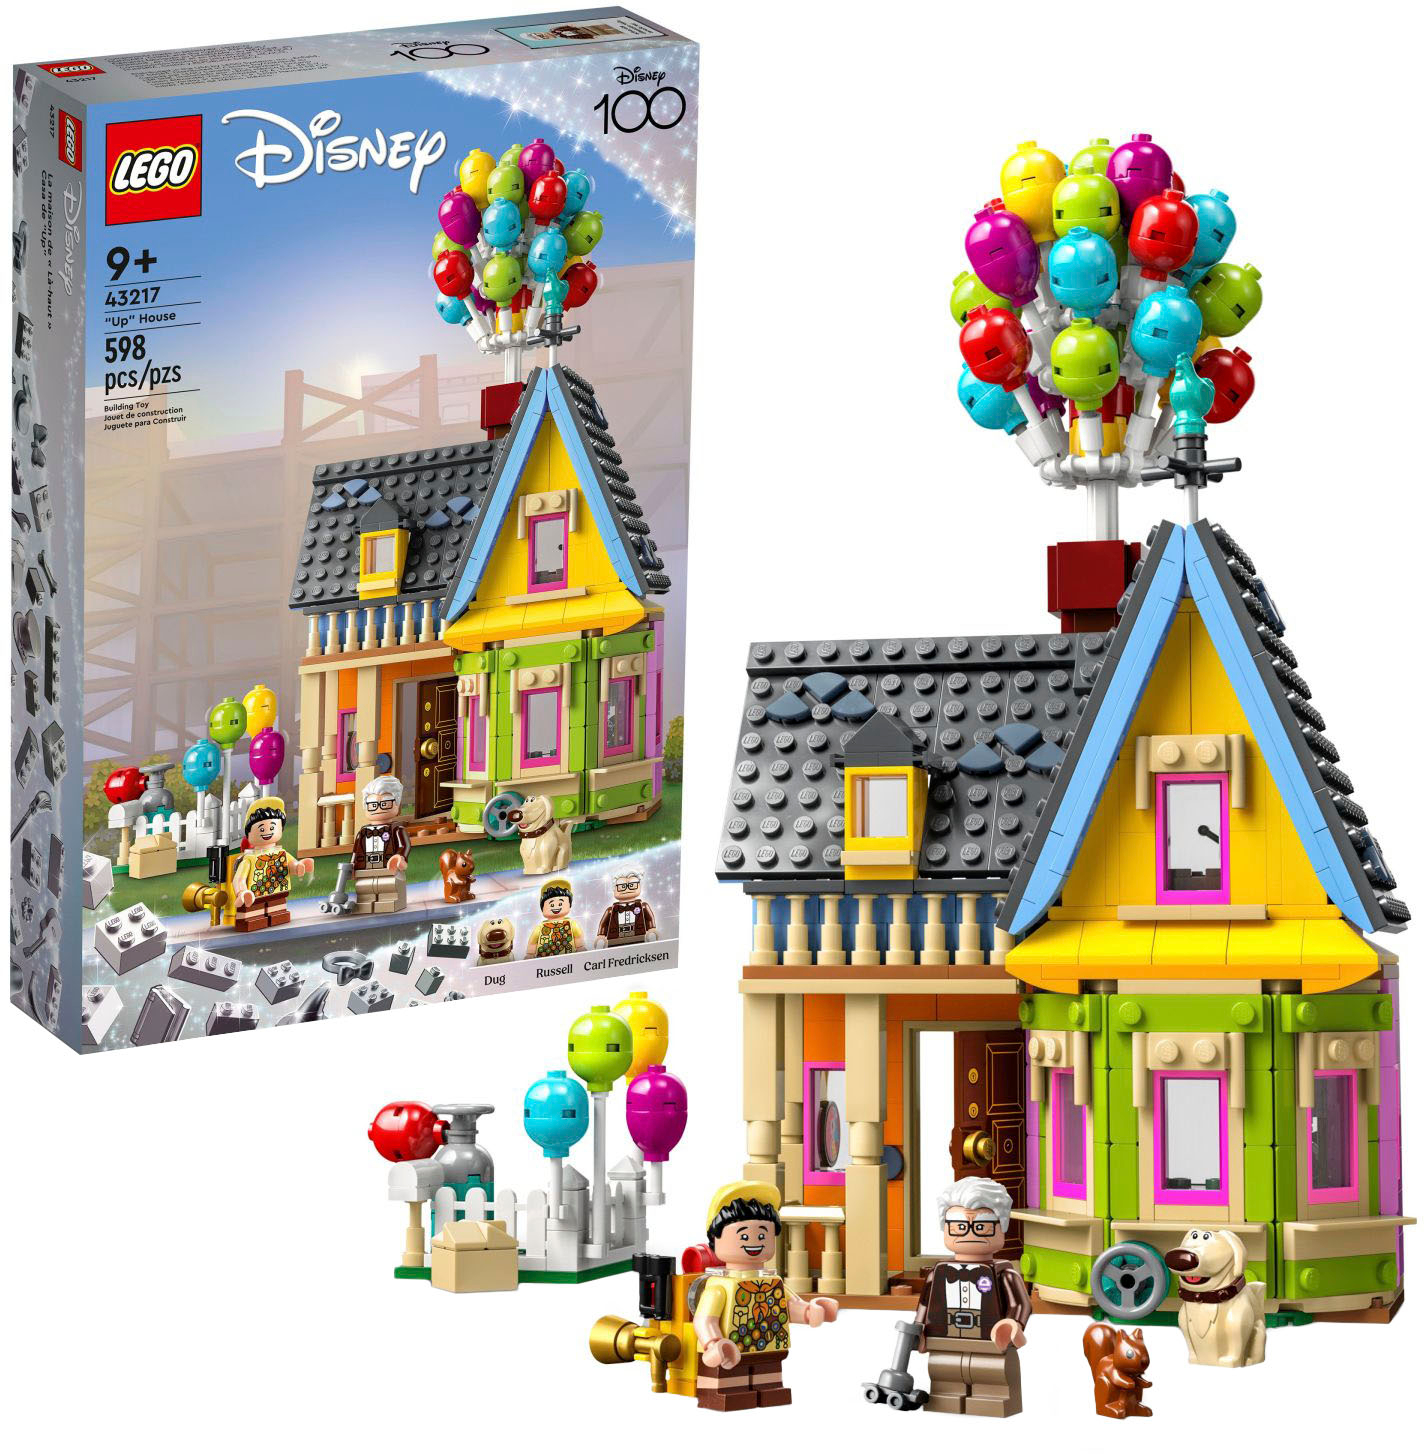 Disney and Pixar House 43217 6427575 - Buy